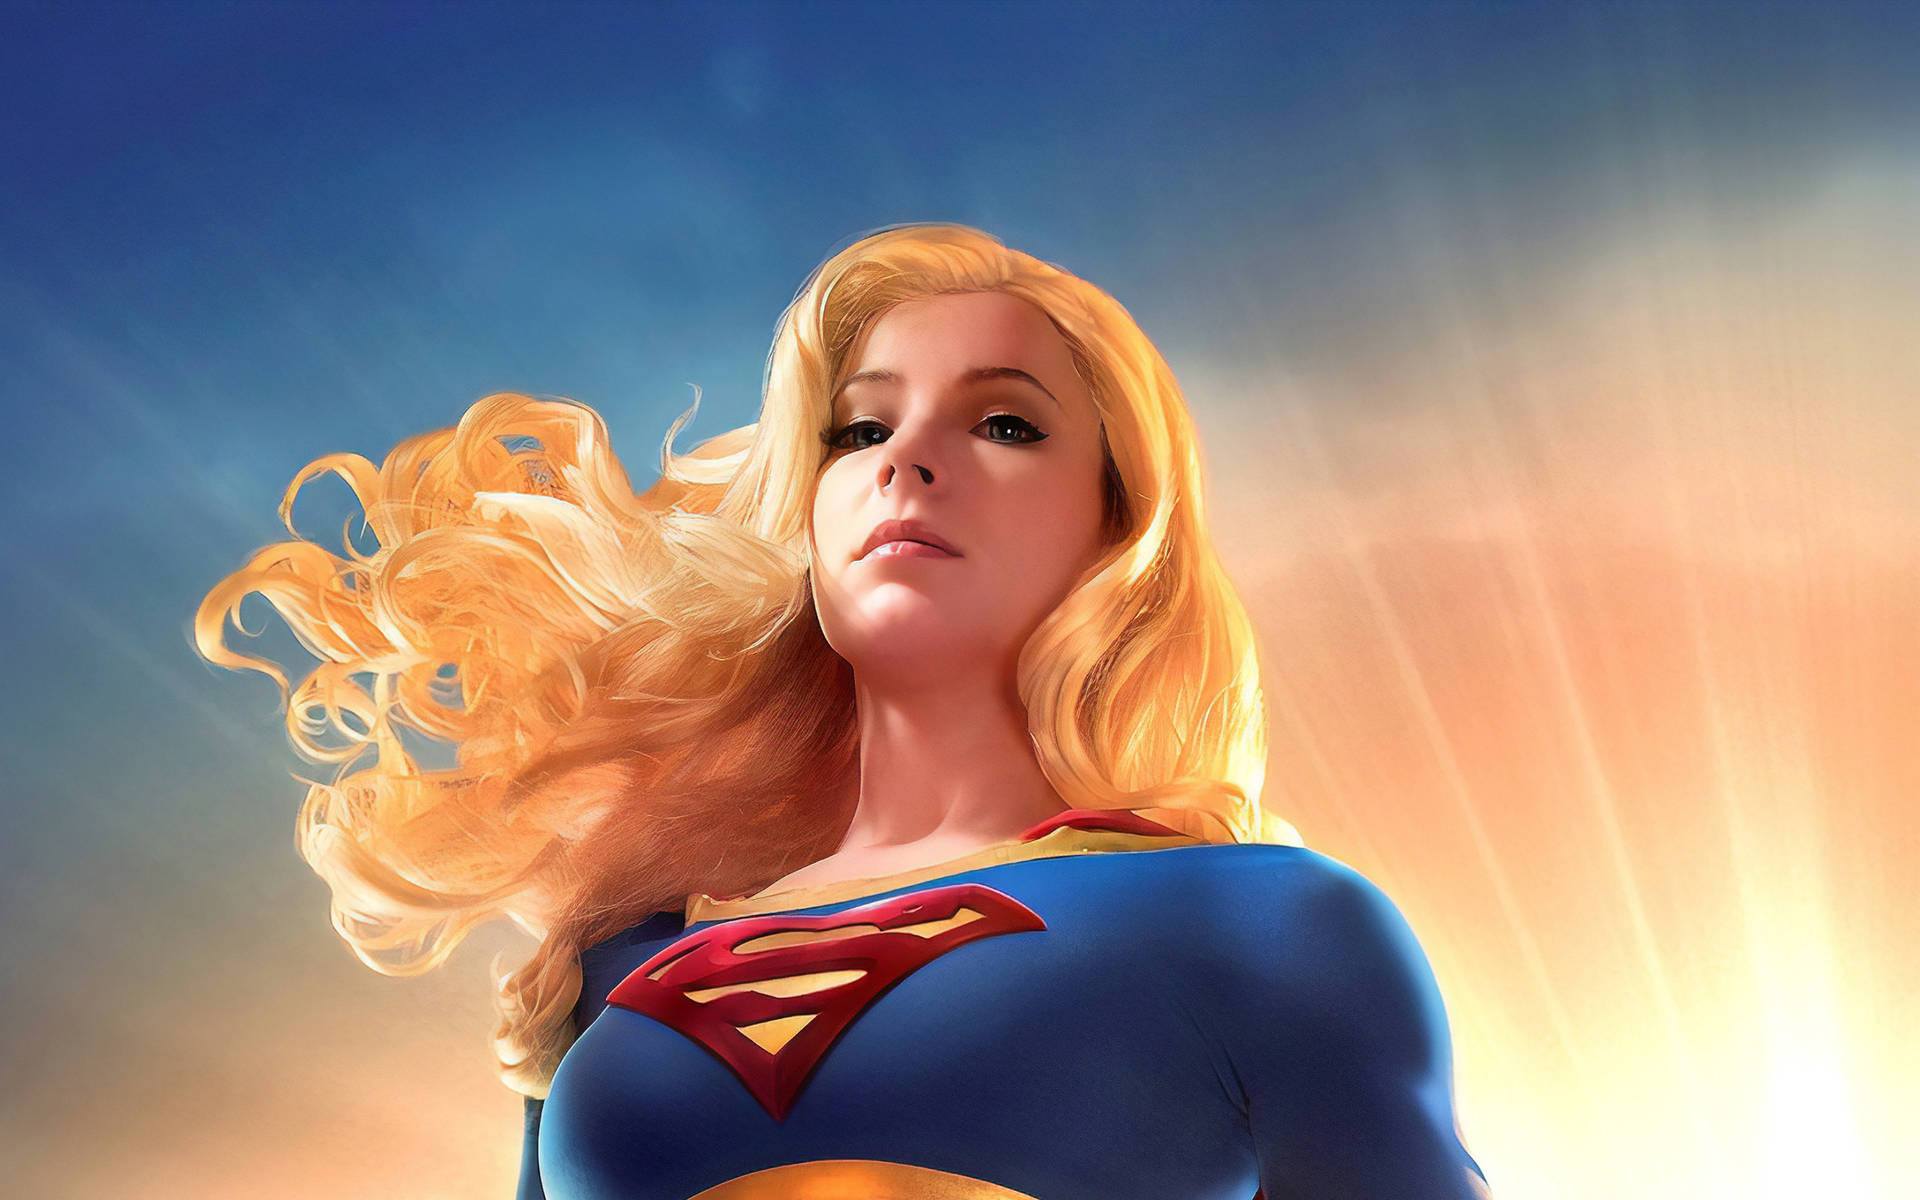 Supergirl Low Angle Shot Wallpaper